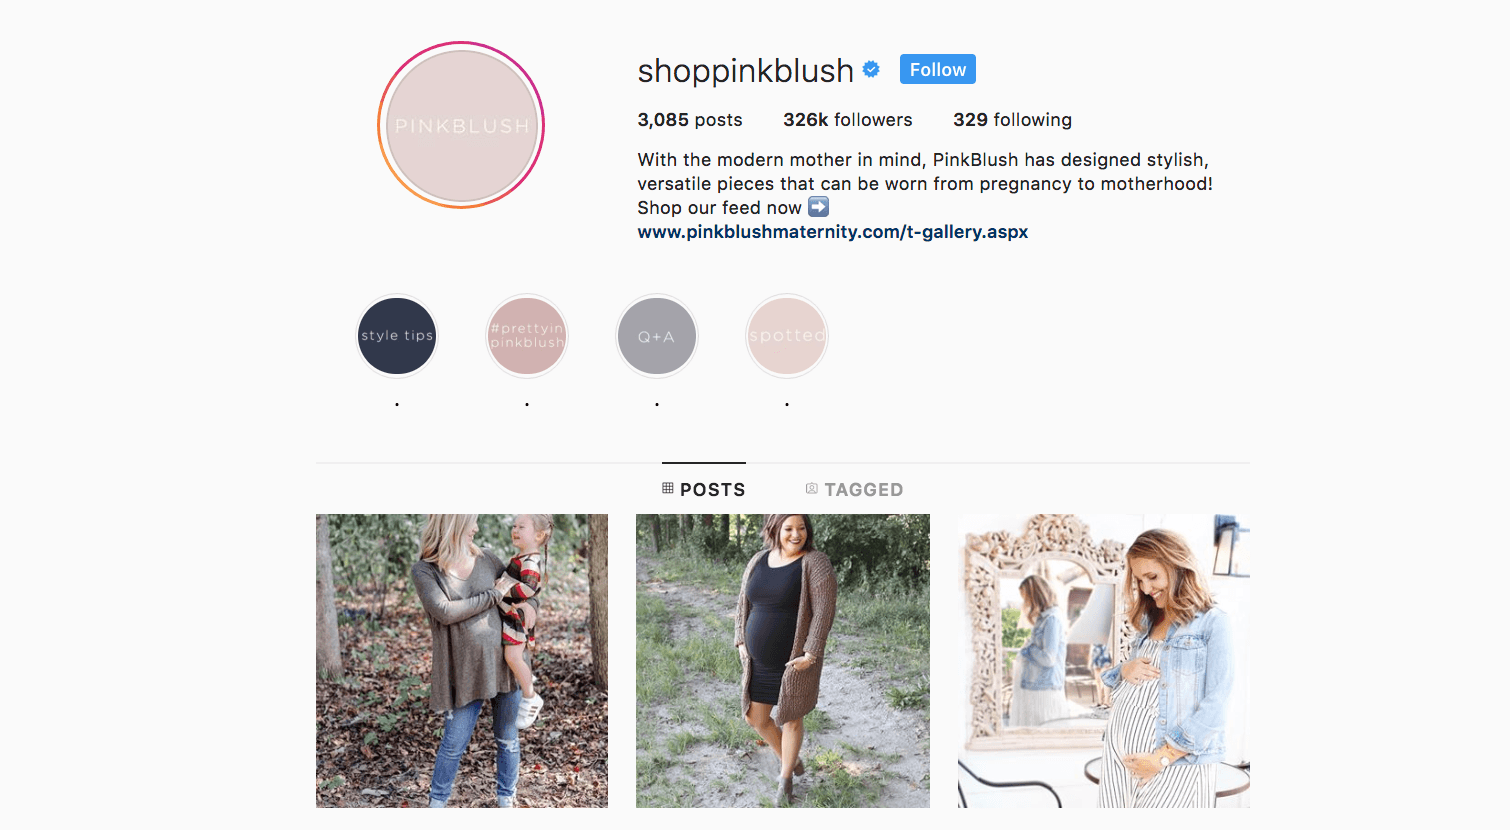 shoppinkblush verificado en instagram